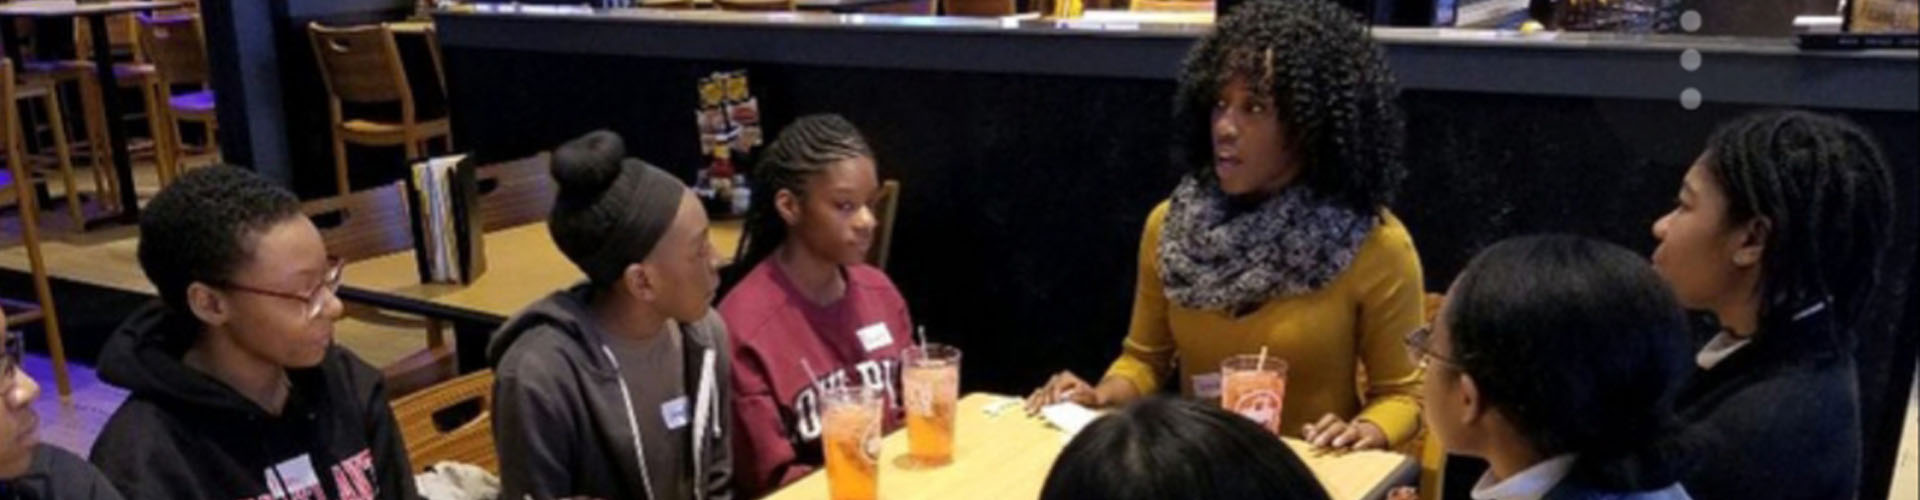 Tiyanna Washington with young female students